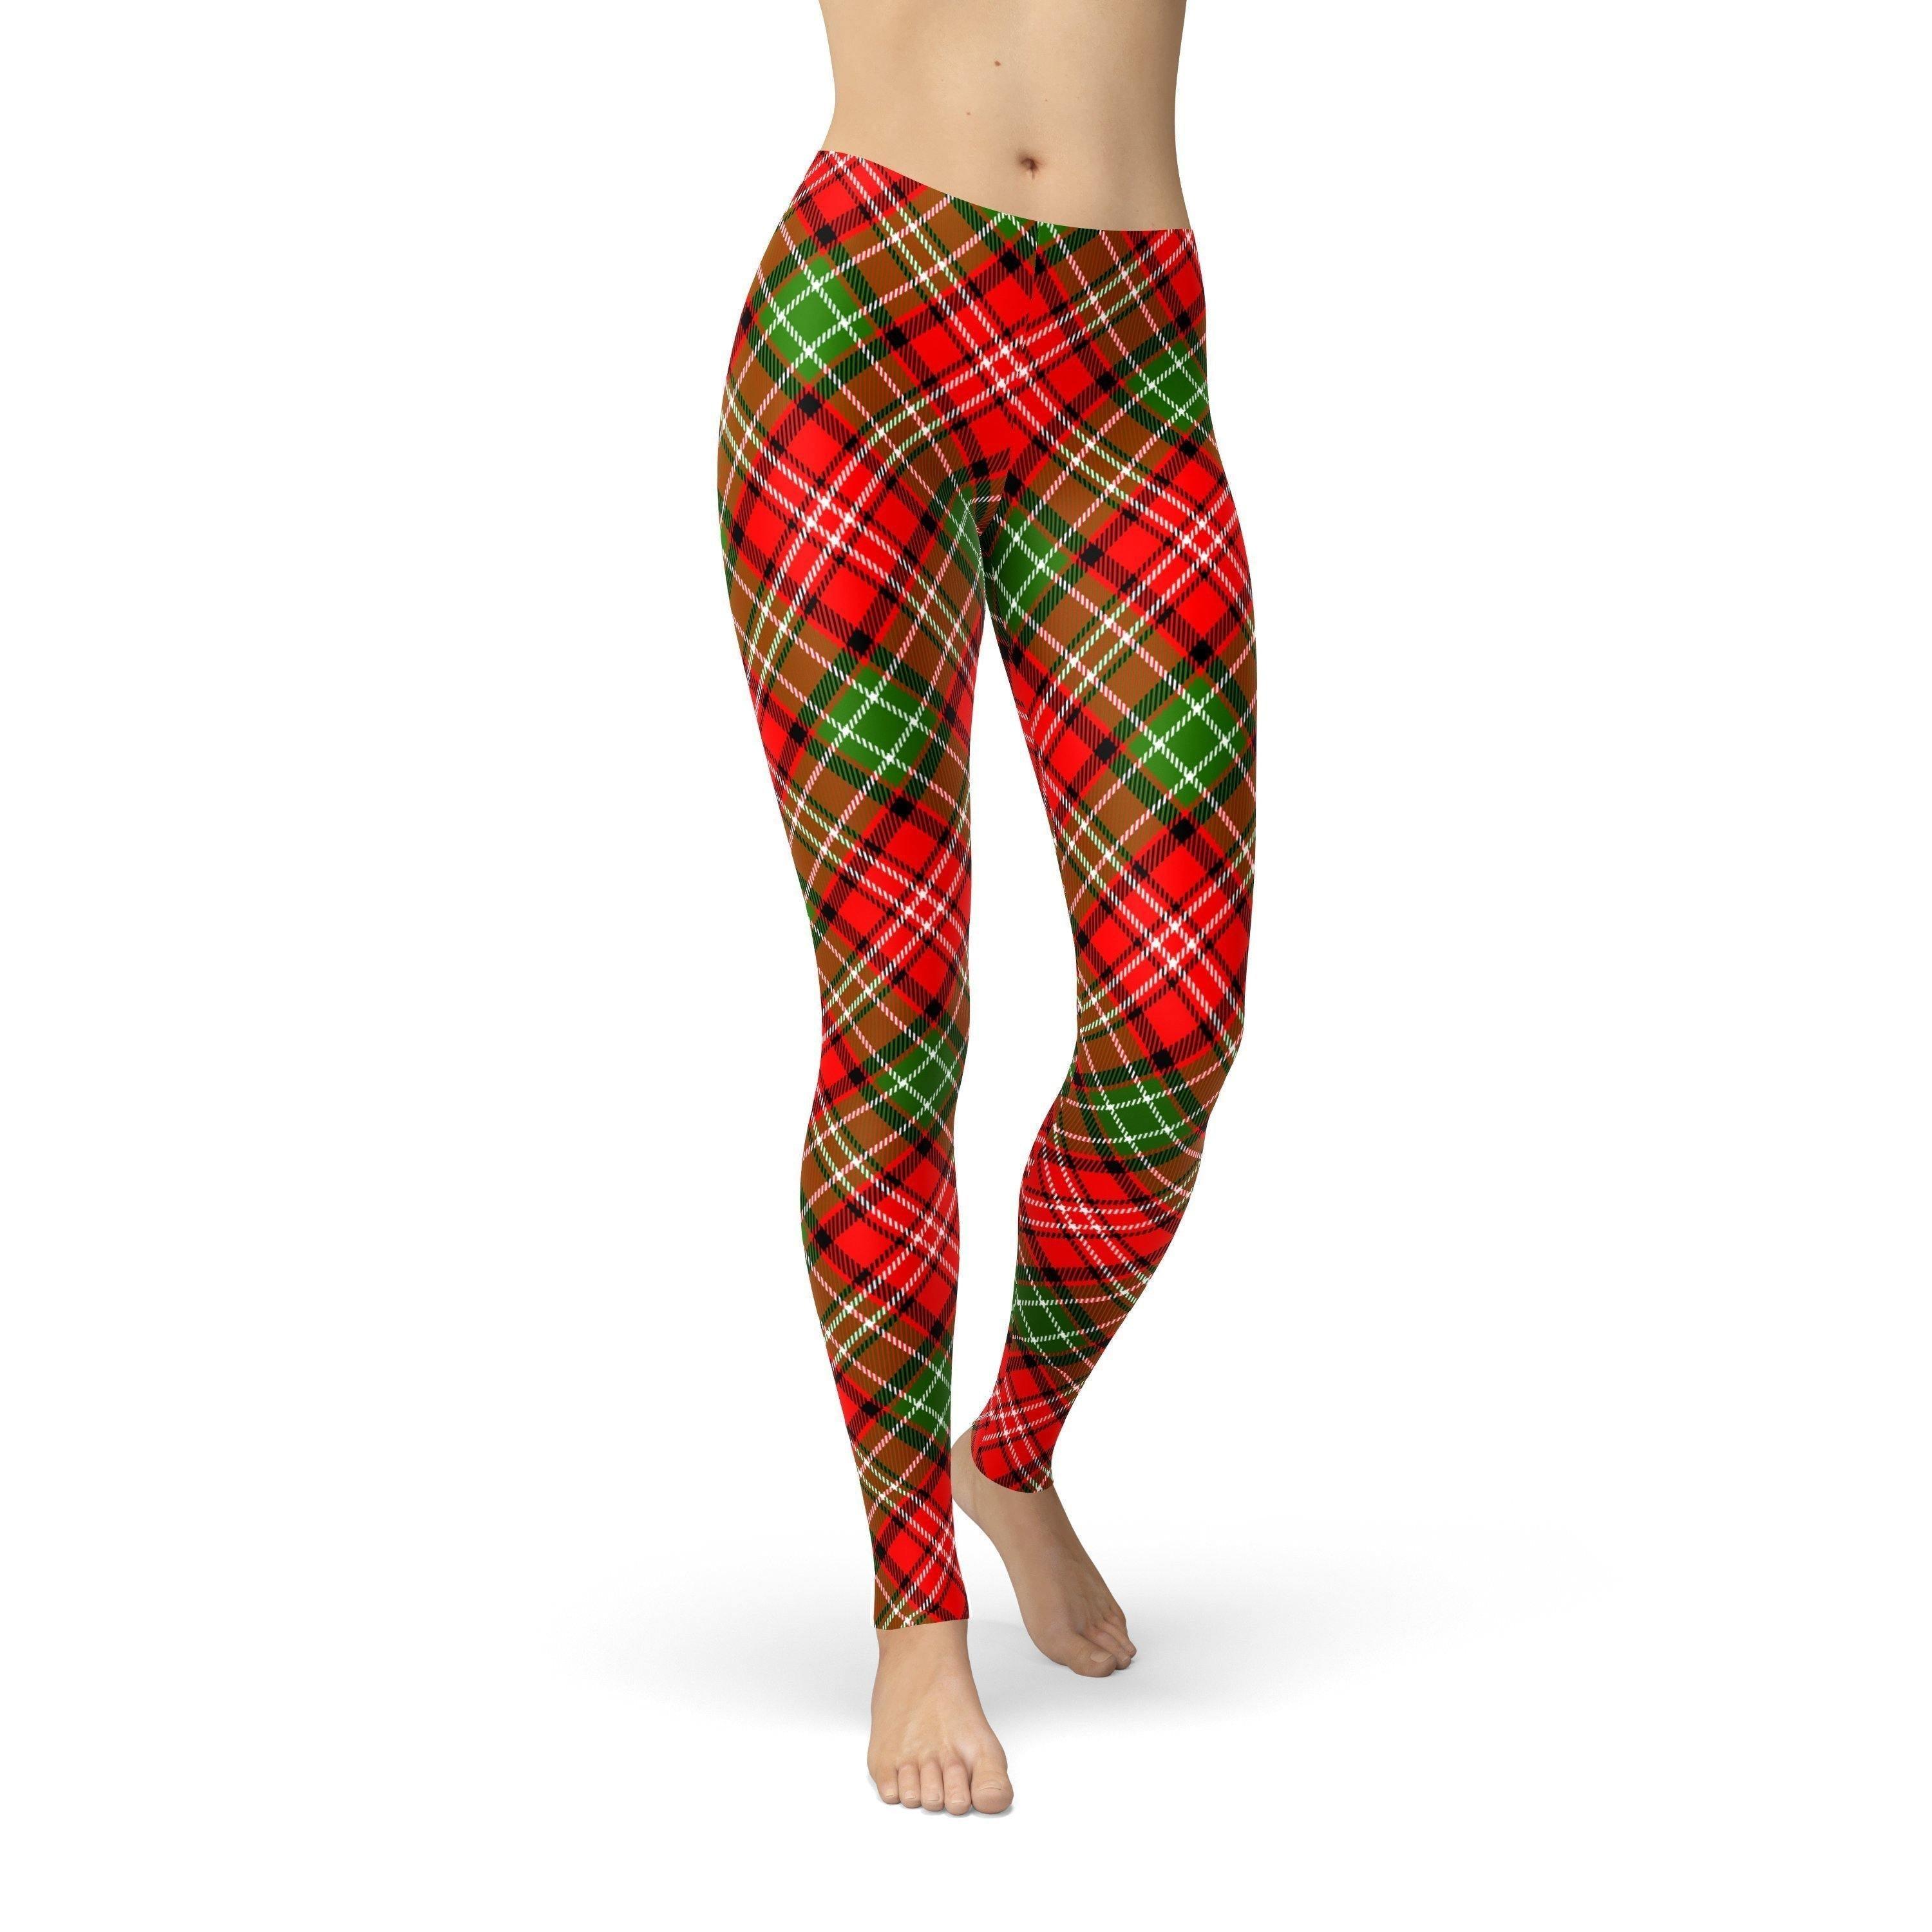 Jean Red Green Plaid Leggings - fashion$ense-6263